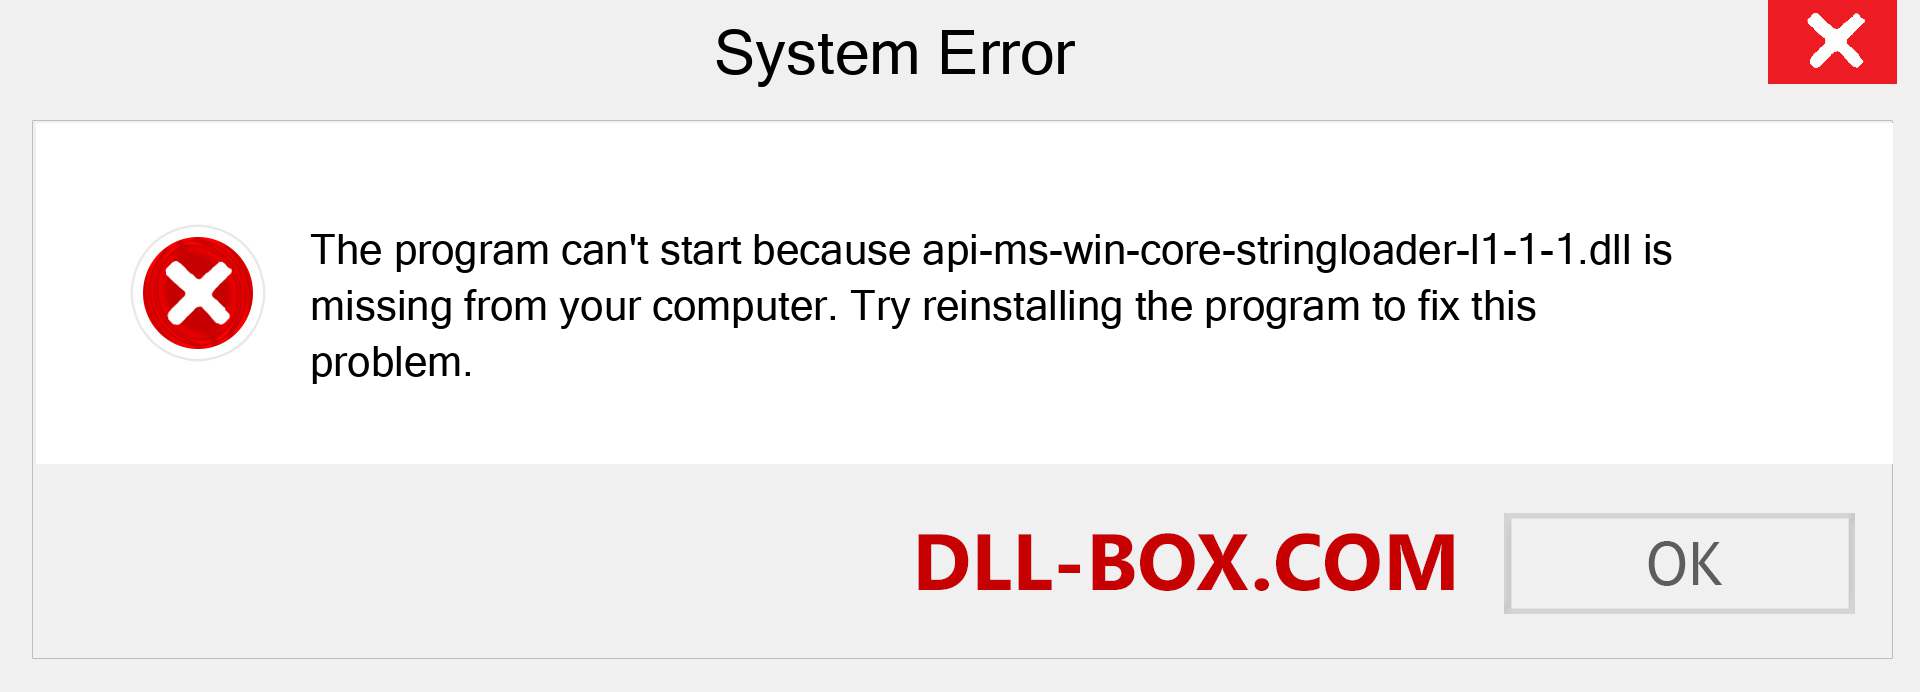  api-ms-win-core-stringloader-l1-1-1.dll file is missing?. Download for Windows 7, 8, 10 - Fix  api-ms-win-core-stringloader-l1-1-1 dll Missing Error on Windows, photos, images